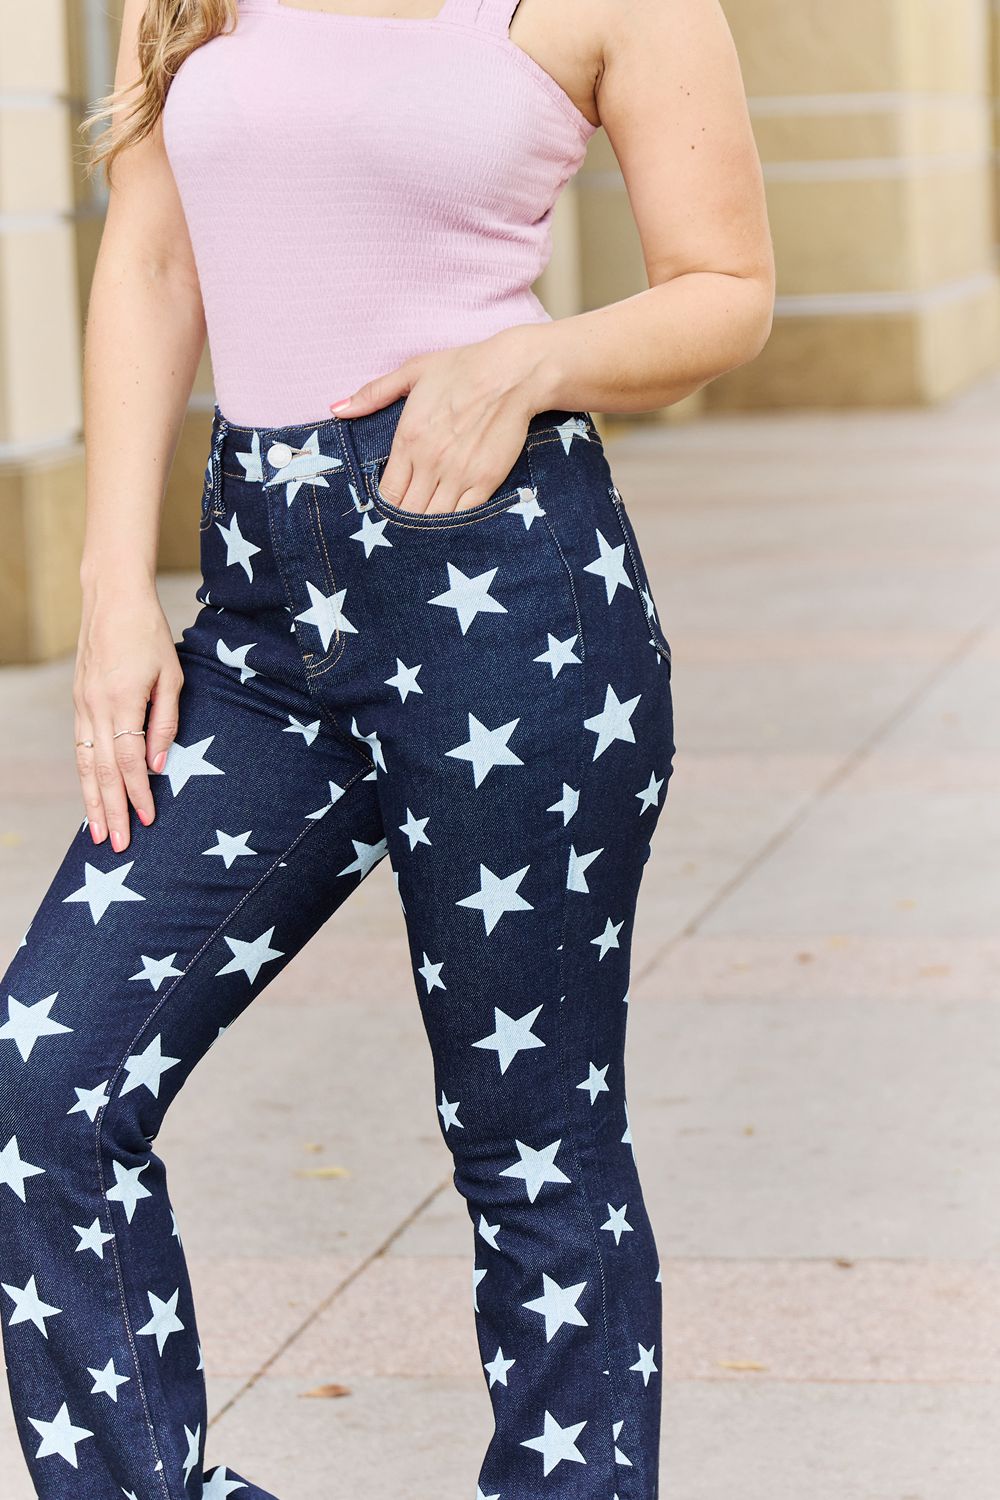 Judy Blue Janelle Full Size High Waist Star Print Flare Jeans Jeans JT's Designer Fashion